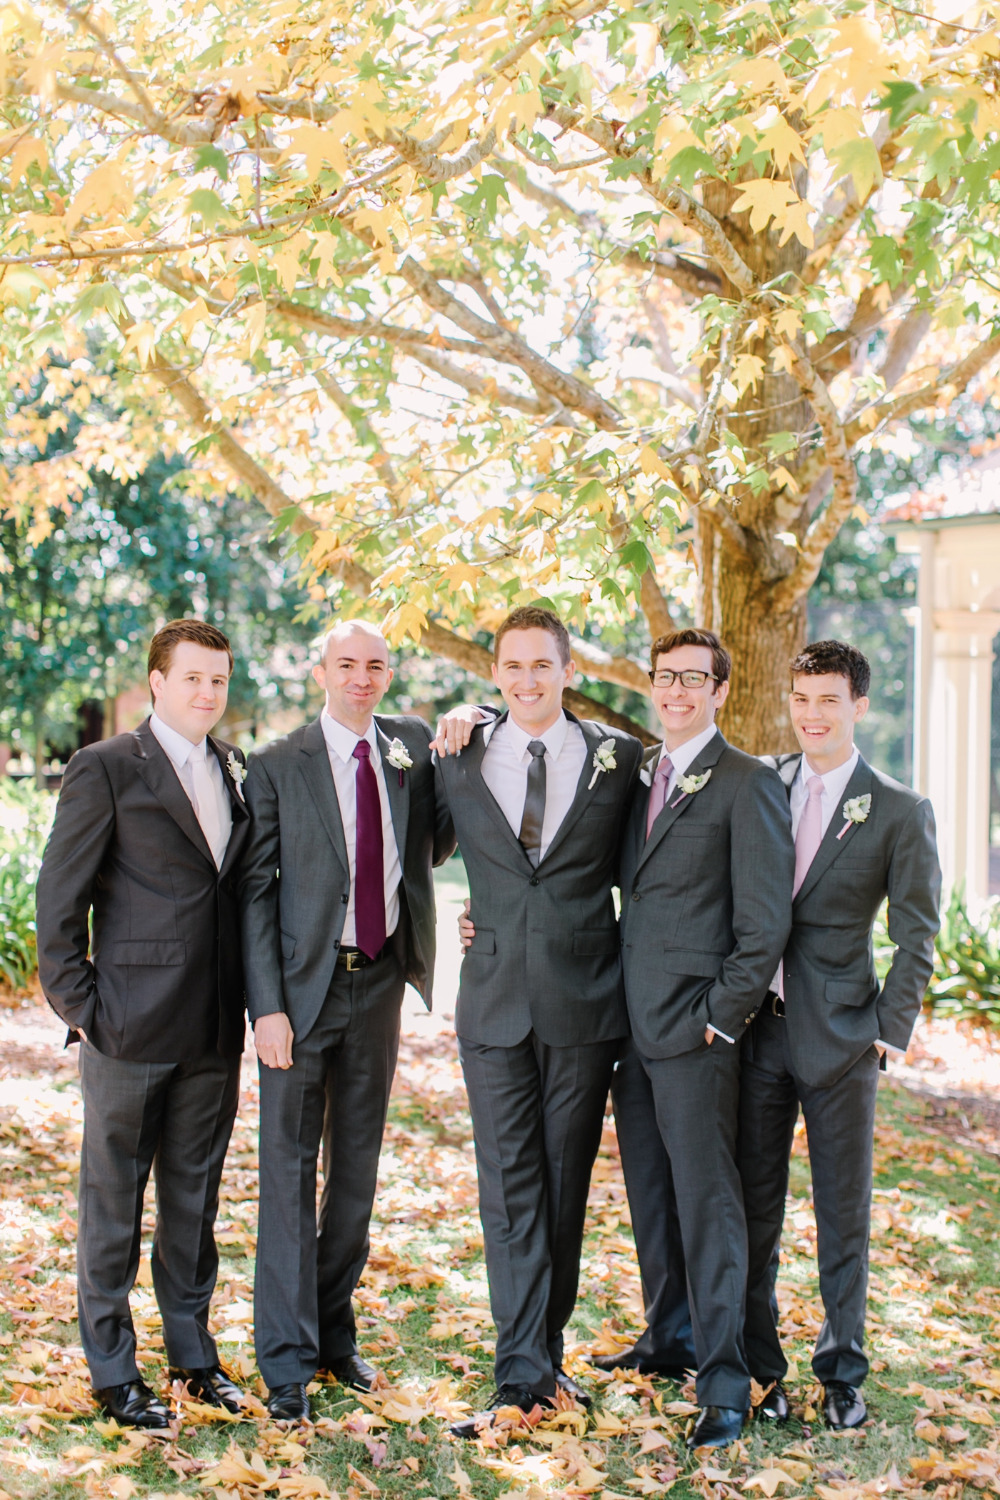 classic grey groomsmen with purple ties